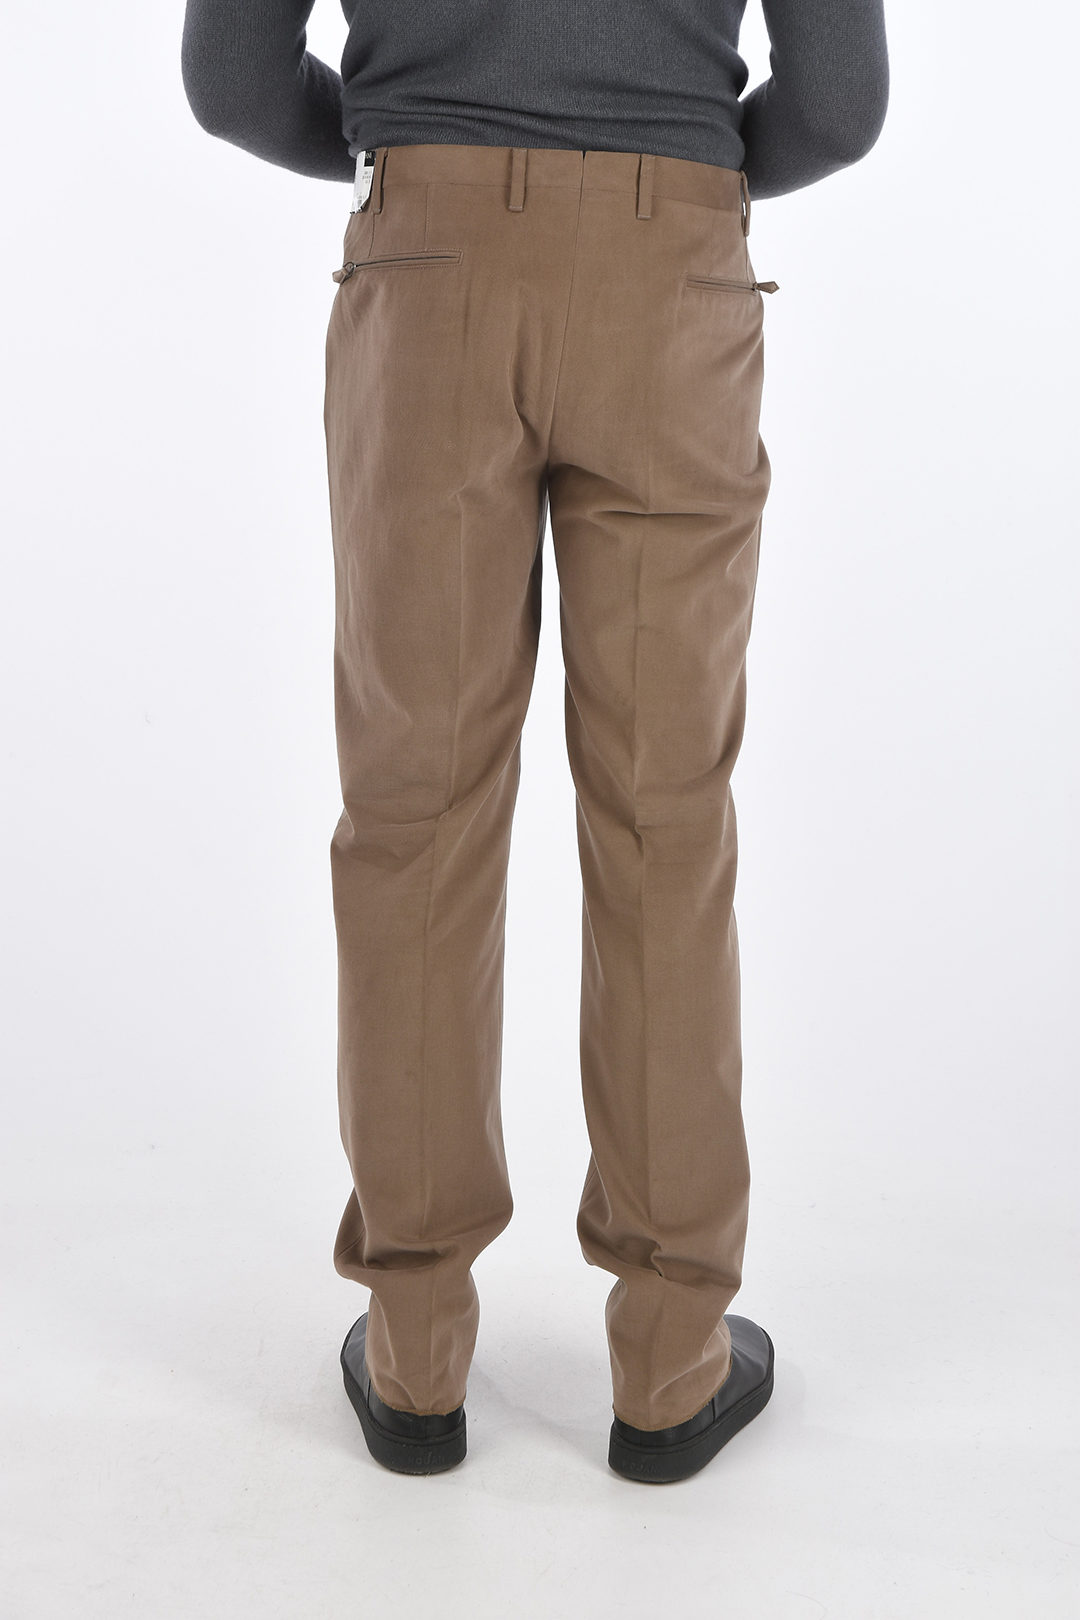 NZSALE | Zmart Australia Men's Fleece Casual Sports Track Pants w Zip  Pocket Striped Sweat Trousers S-6XL - Grey